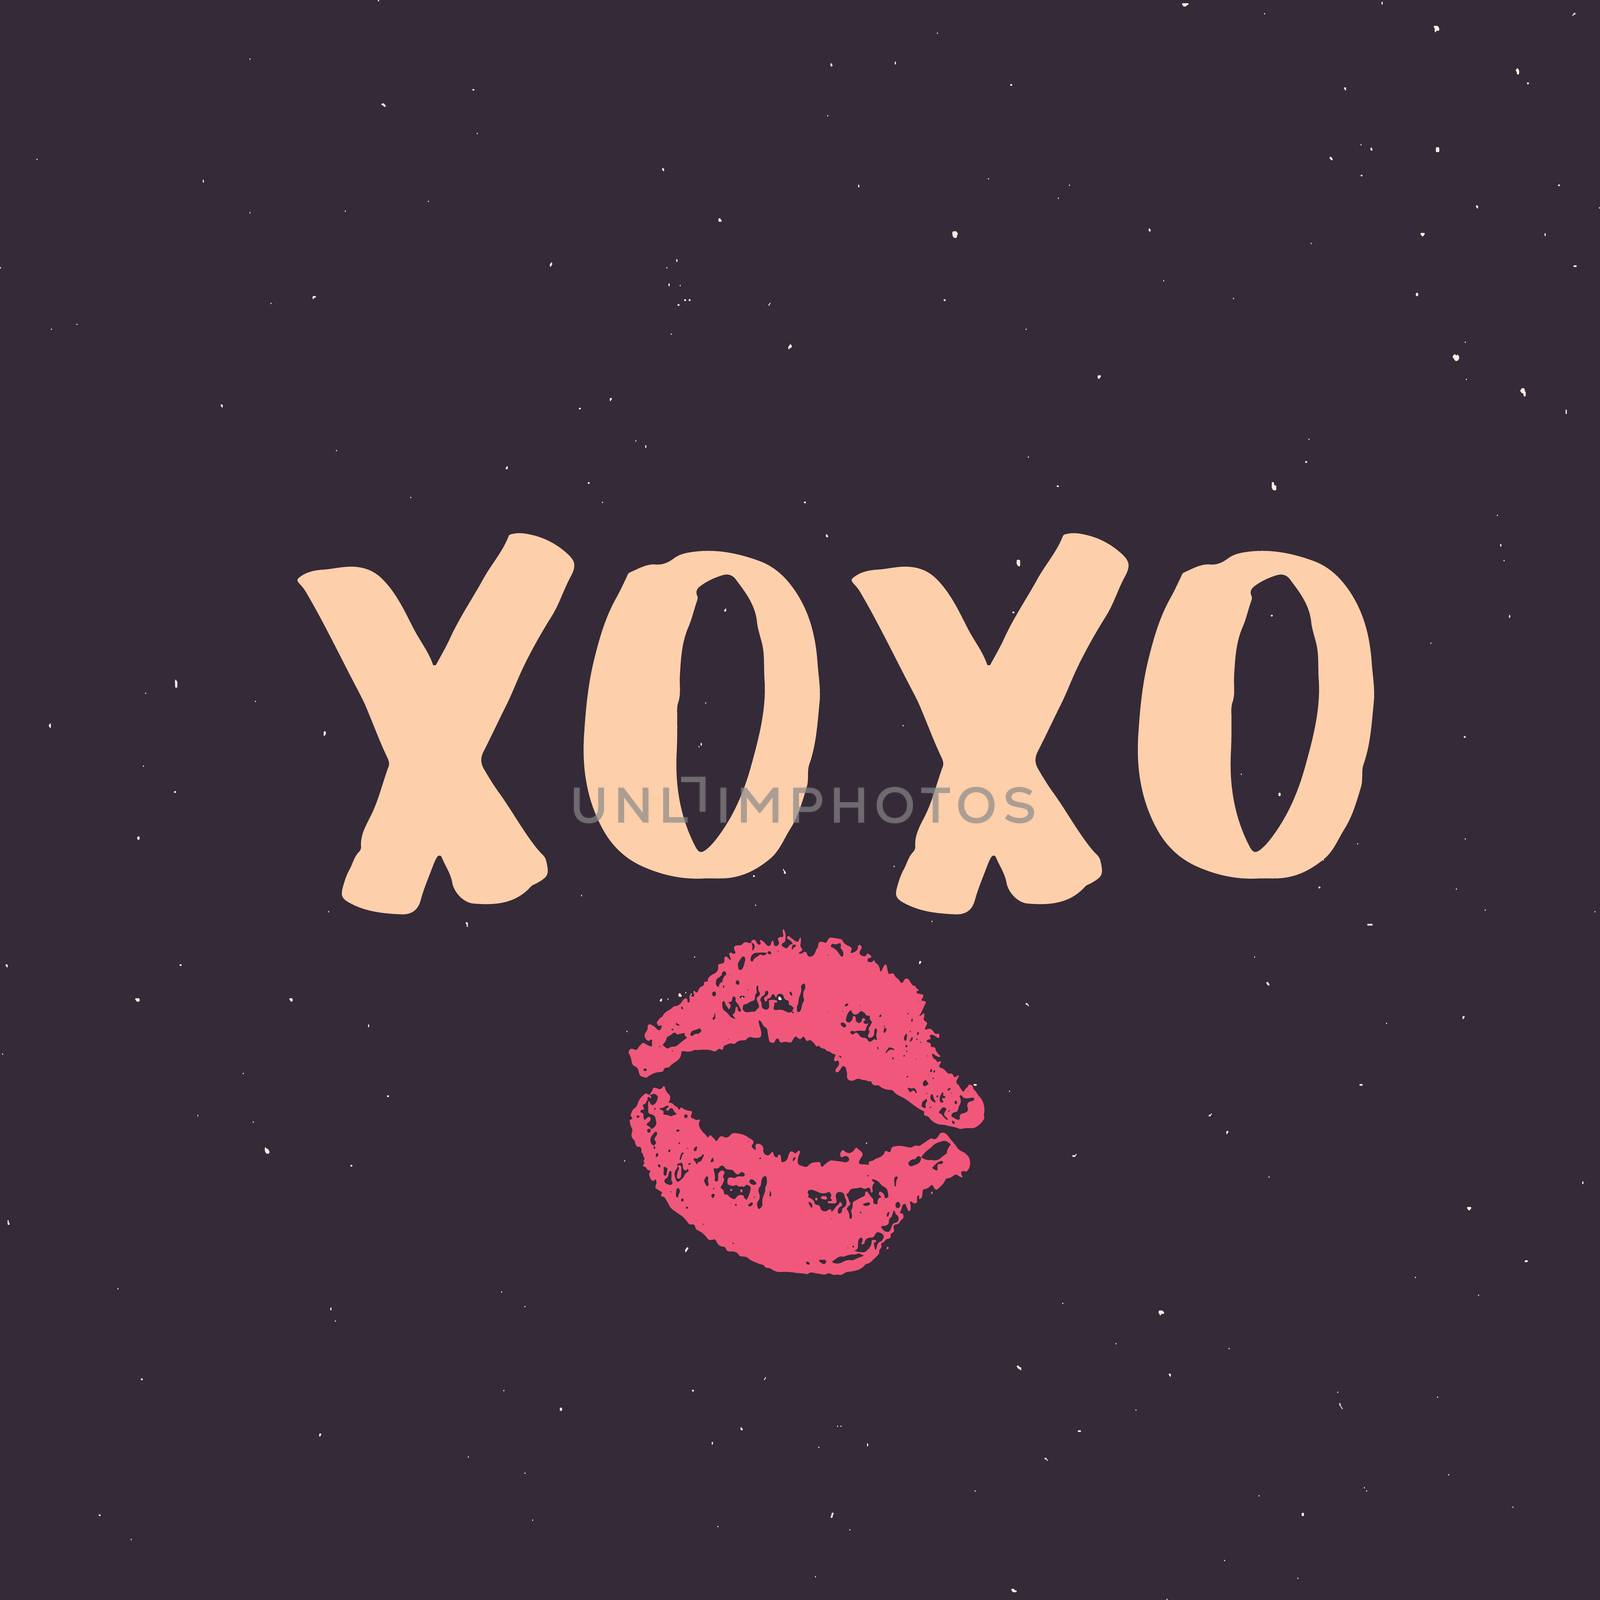 XOXO brush lettering sign, Grunge calligraphic hugs and kisses Phrase, Internet slang abbreviation XOXO symbols, vector illustration.